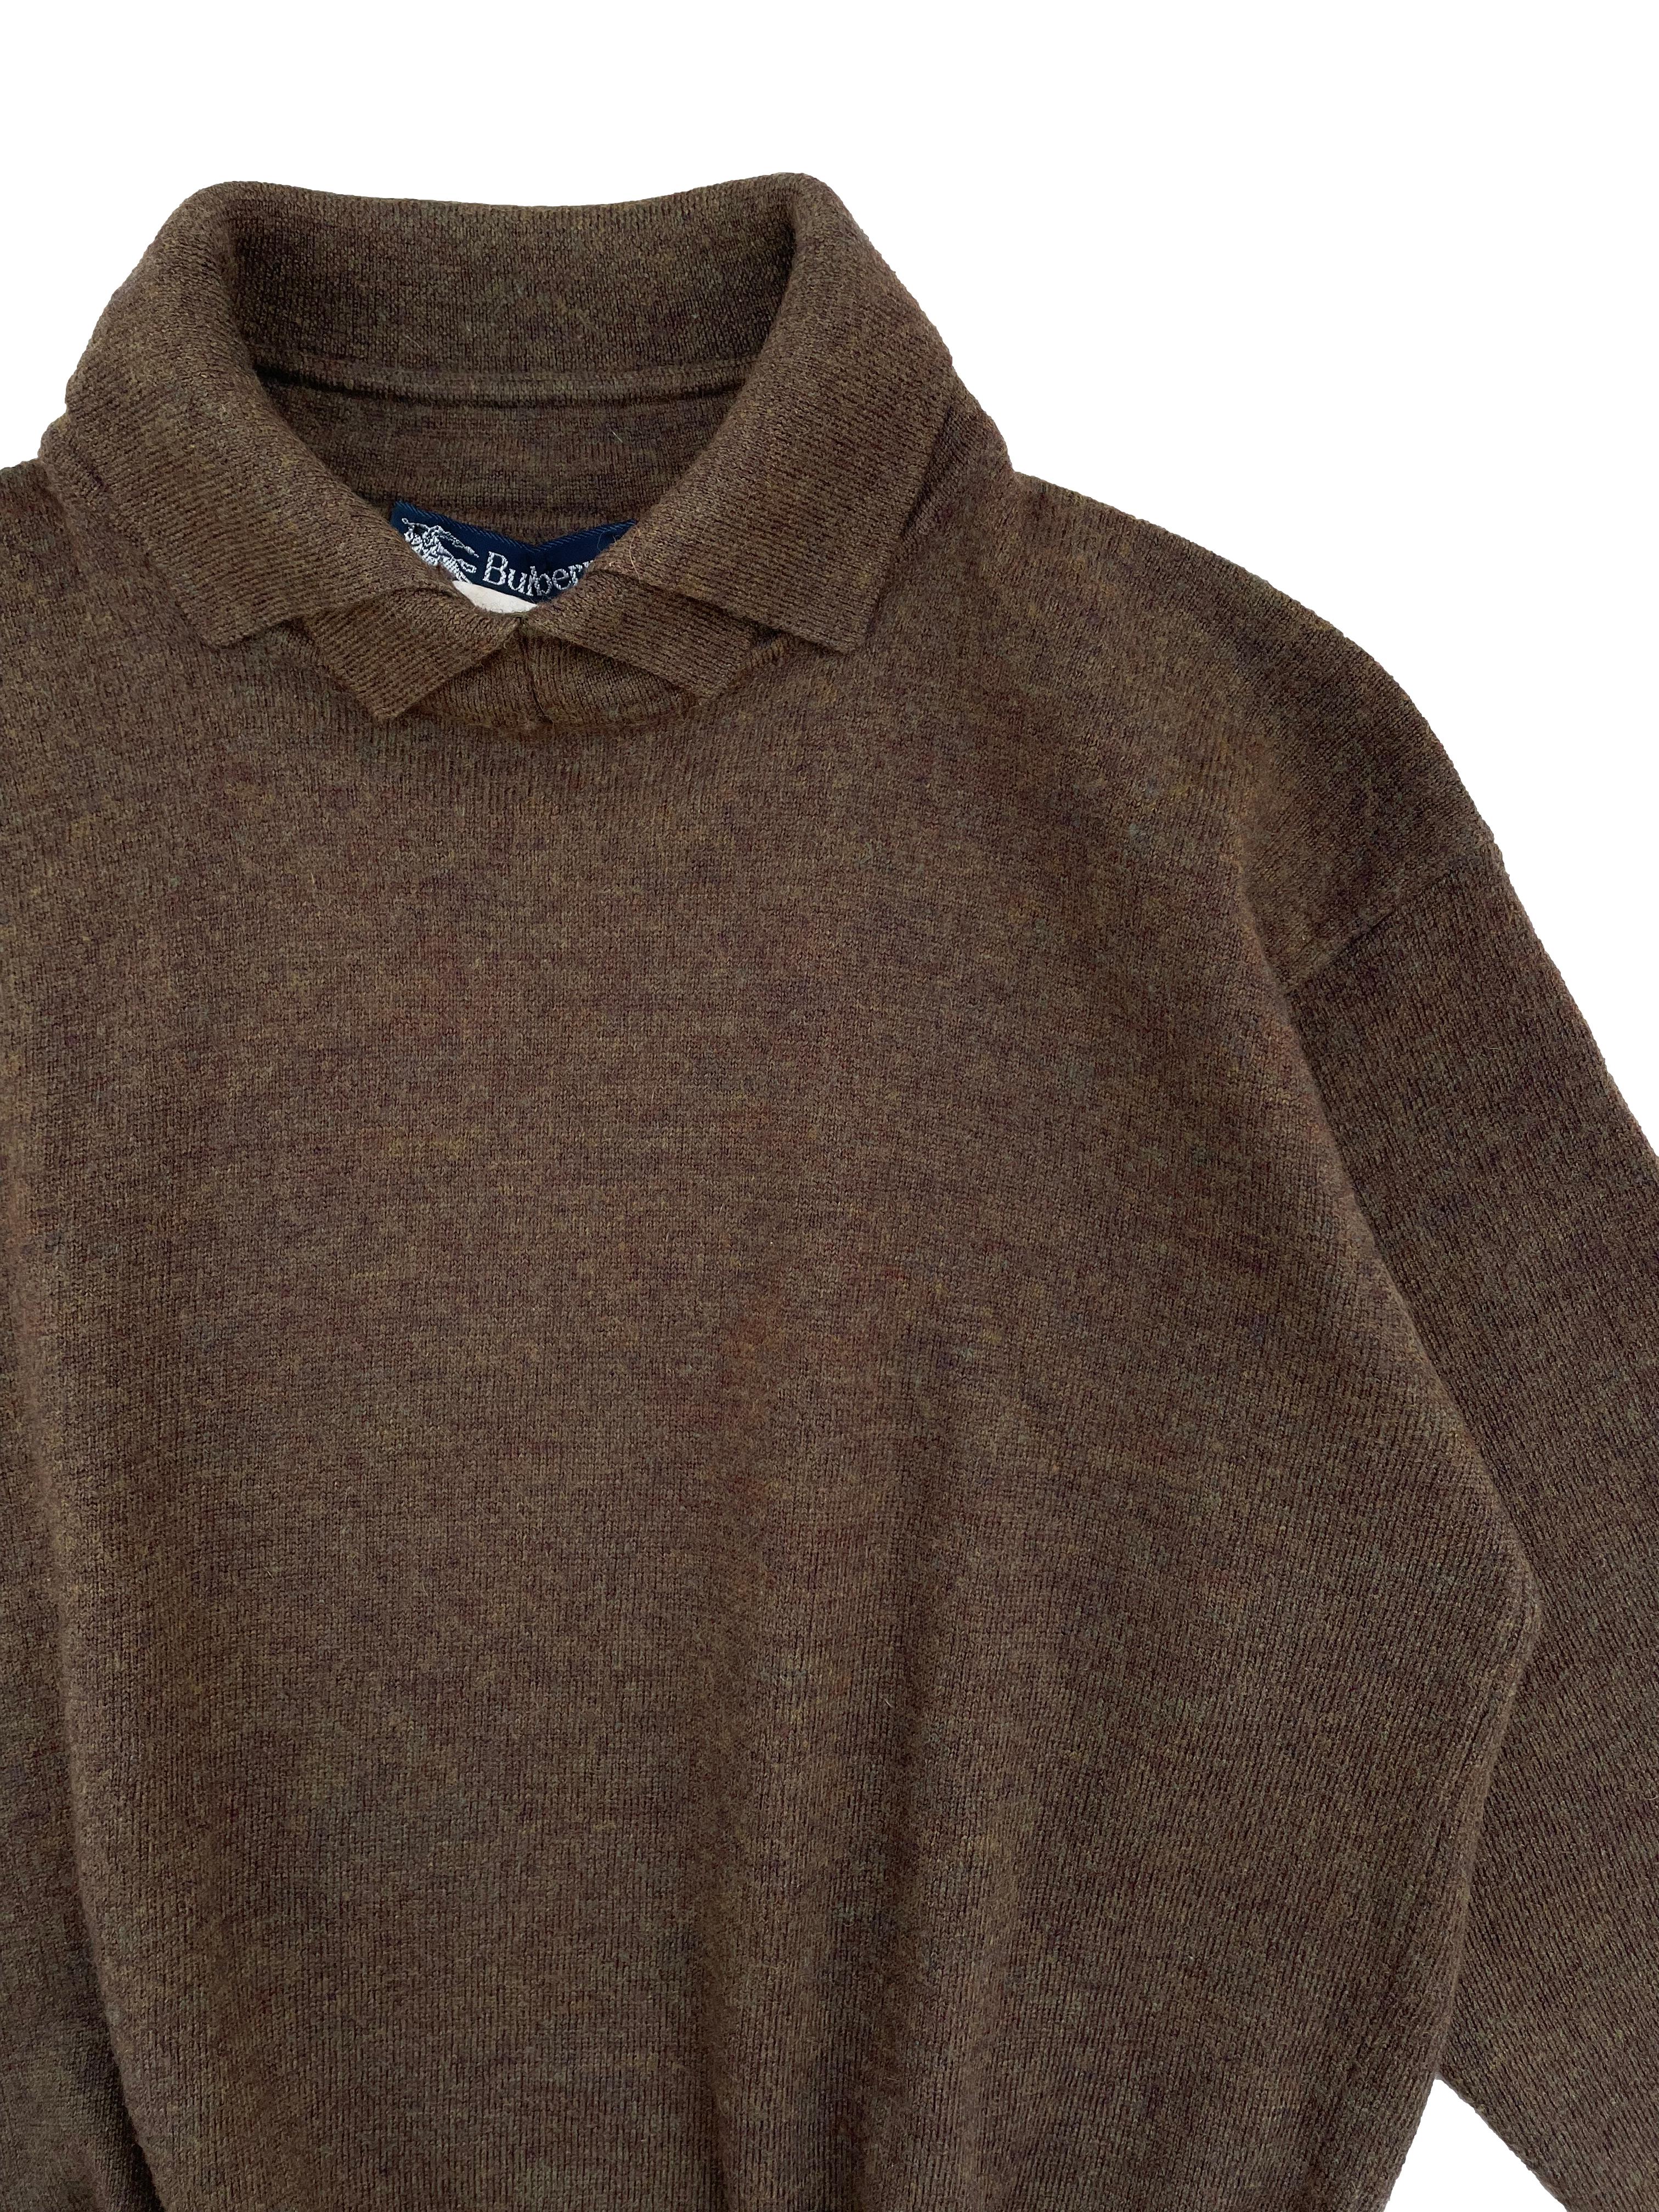 Chompa Burberrys vintage 100% lana marrón jaspeado. Busto 102cm Largo 53cm